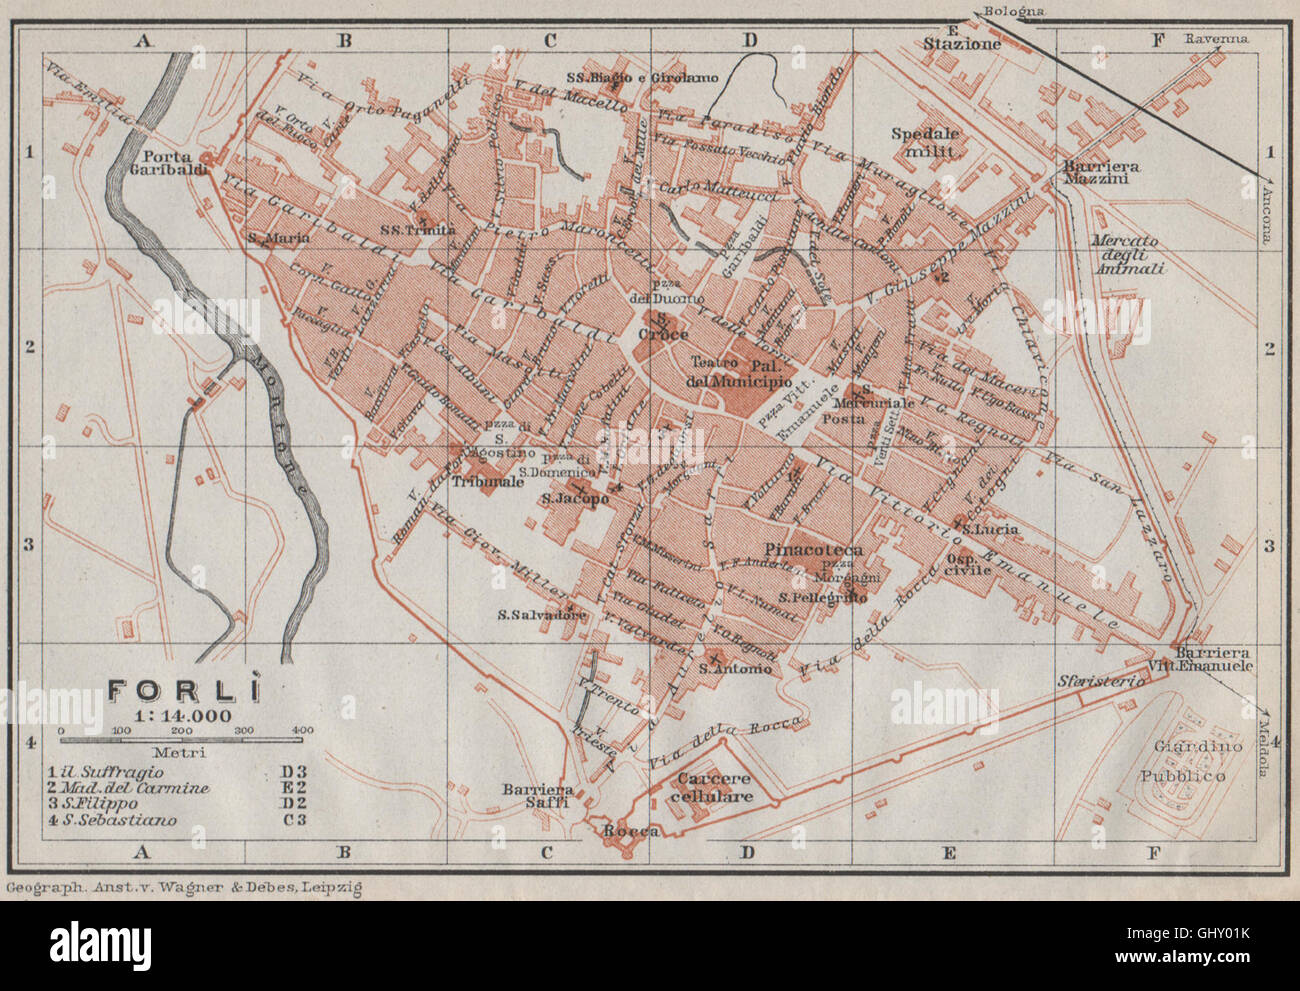 FORLI FORLÌ antique town city plan piano urbanistico. Italy mappa, 1909 Stock Photo